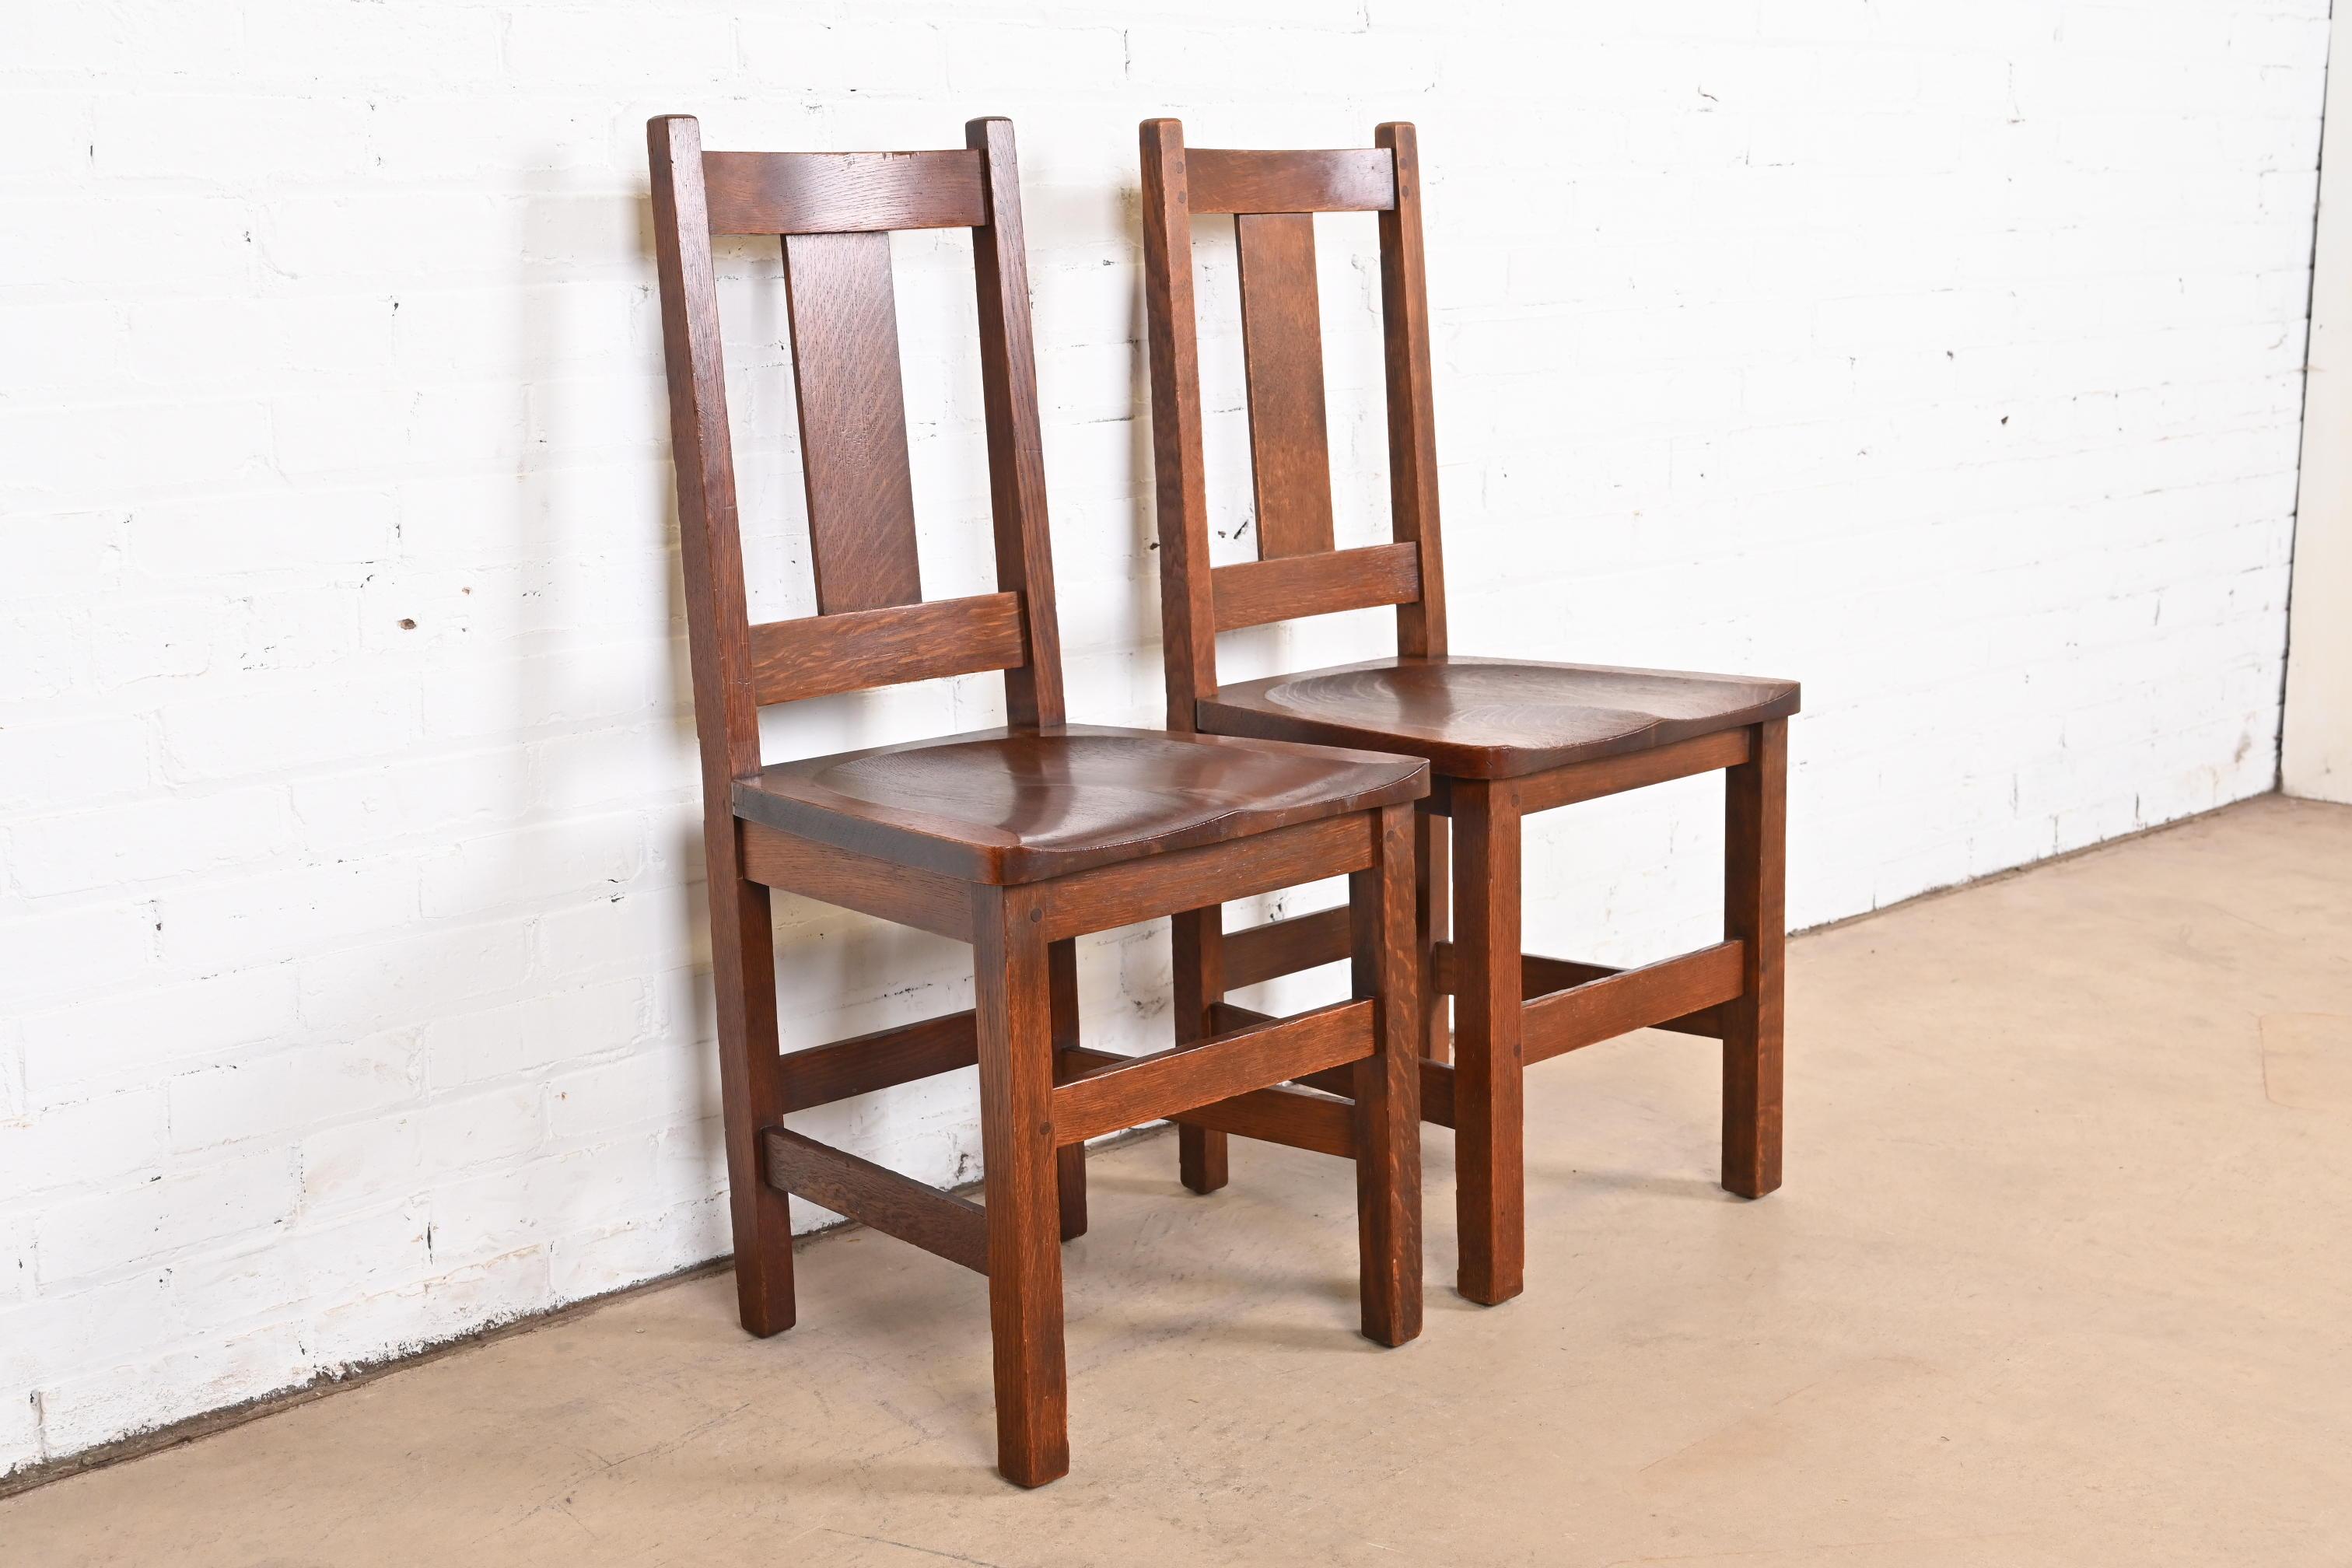 Limbert Mission Oak Arts & Crafts Beistellstühle, Paar (Eichenholz)